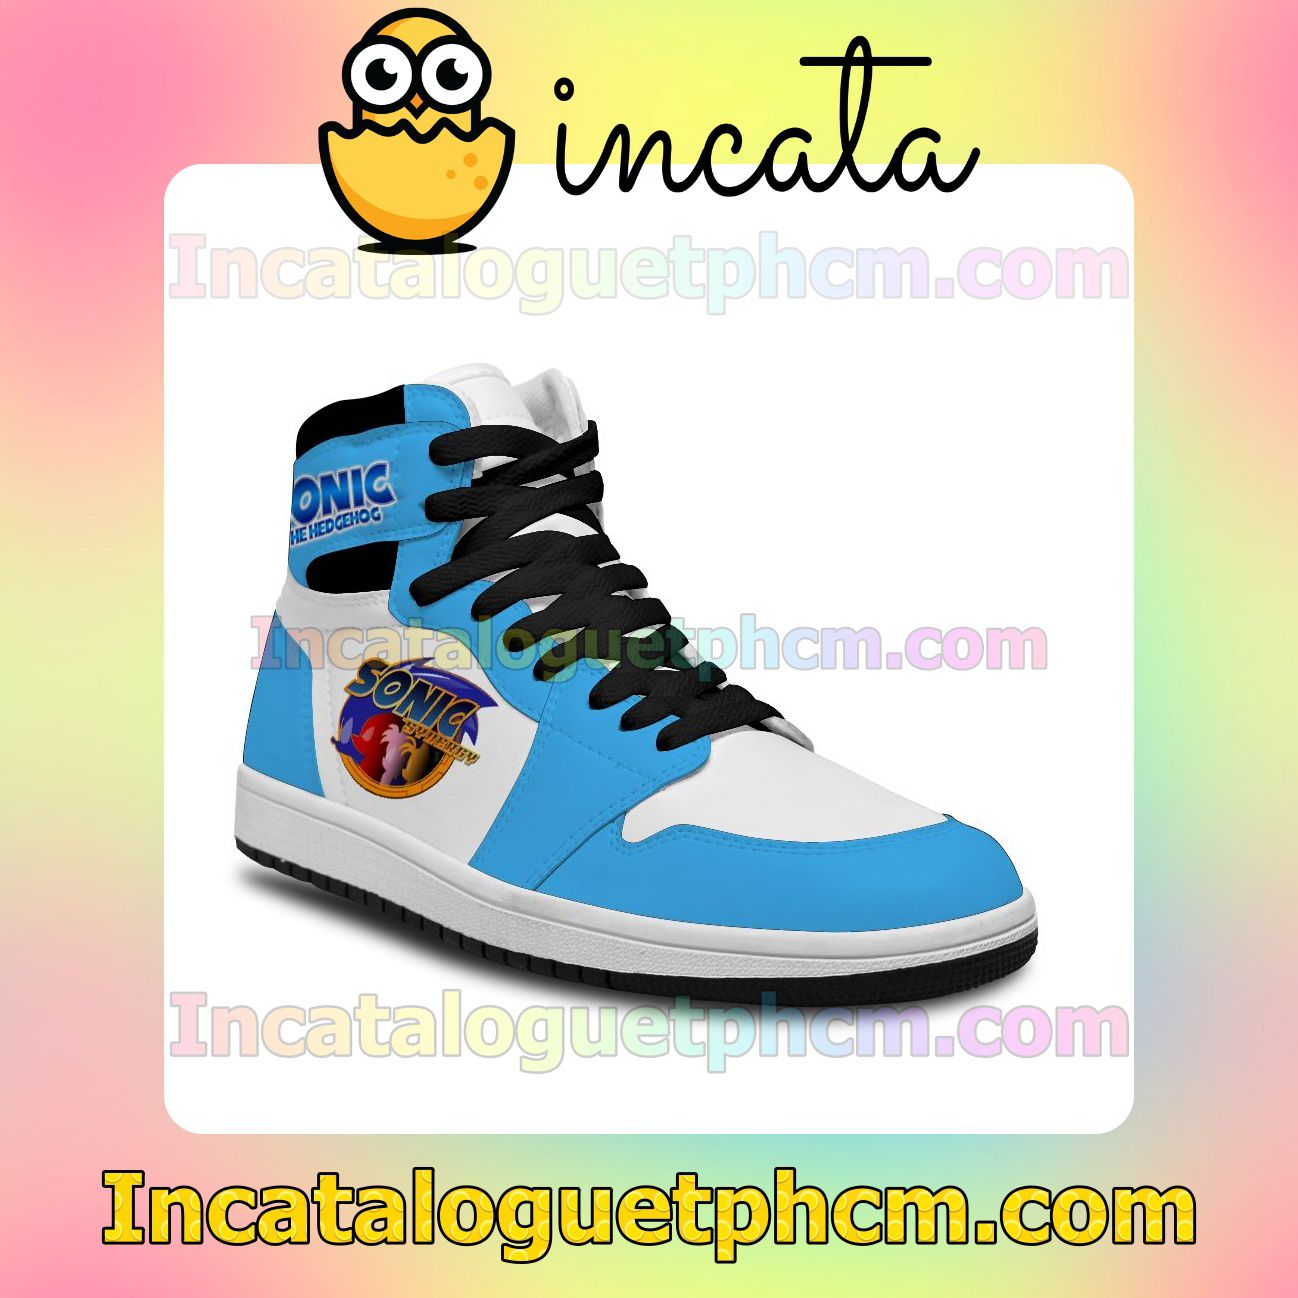 Funny Tee Sonic Synergy Logo by Sonicguru Air Jordan 1 Inspired Shoes